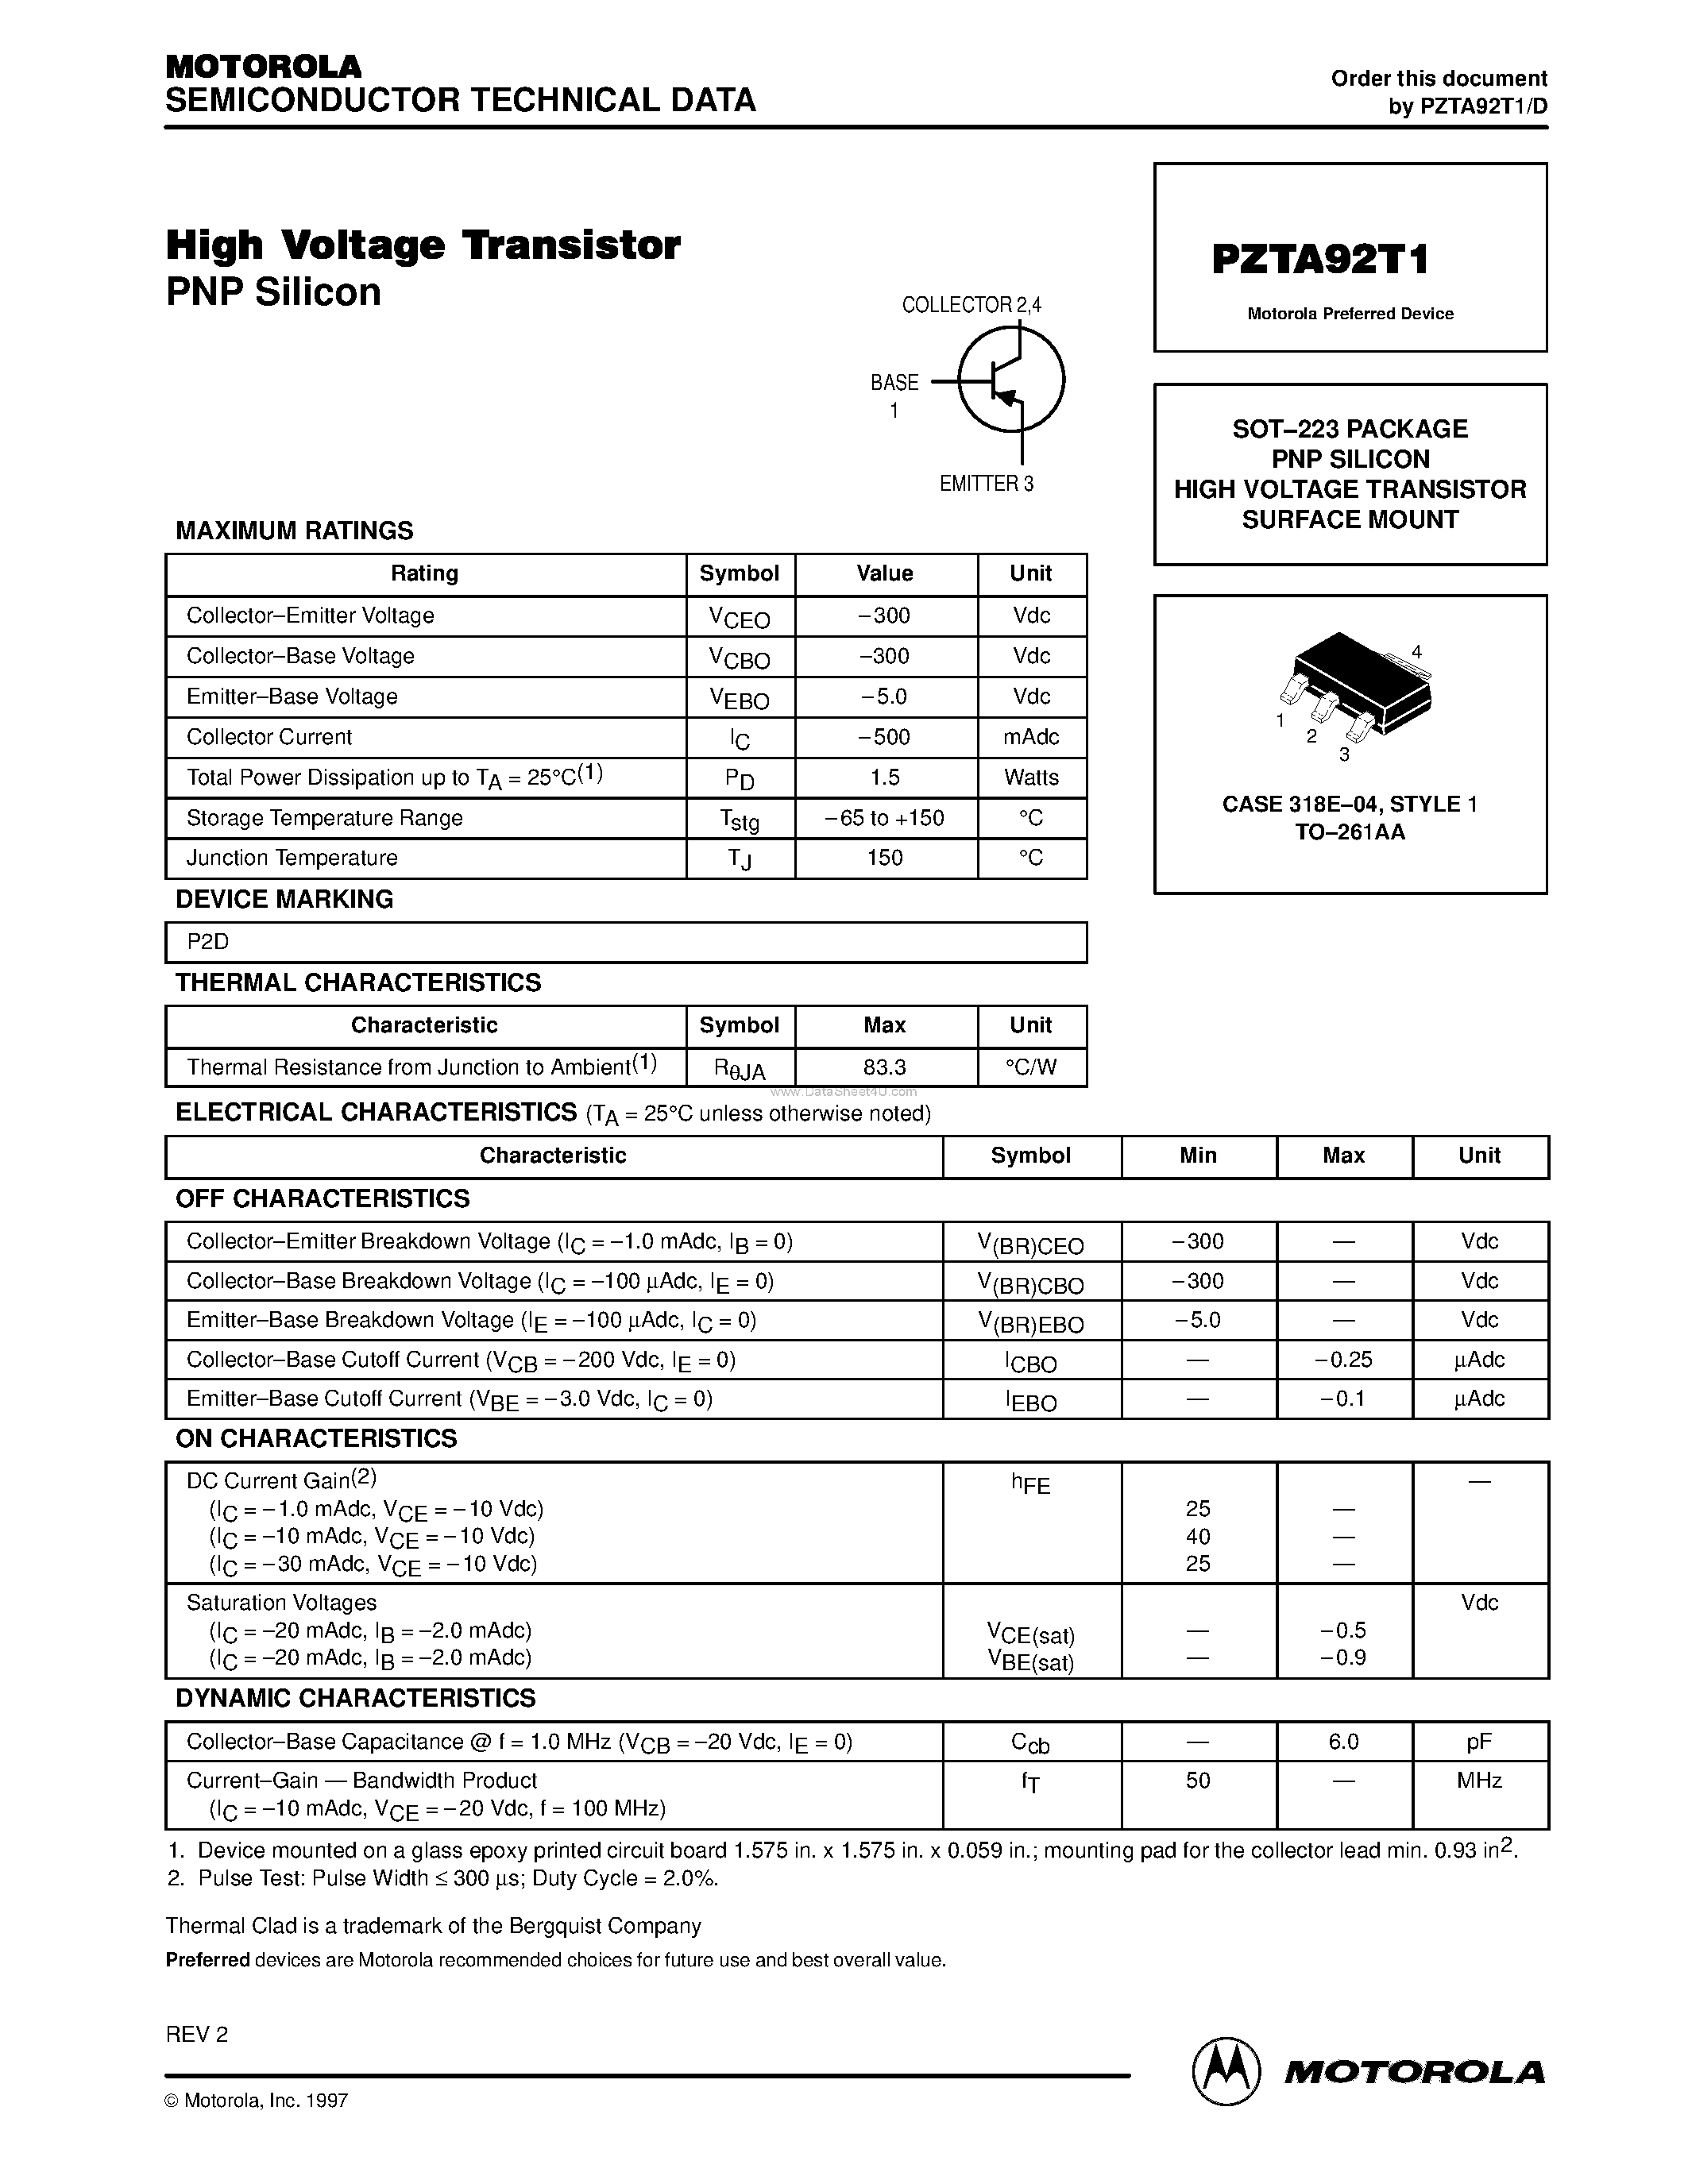 Datasheet PZTA92T1 - PNP SILICON HIGH VOLTAGE TRANSISTOR SURFACE MOUNT page 1